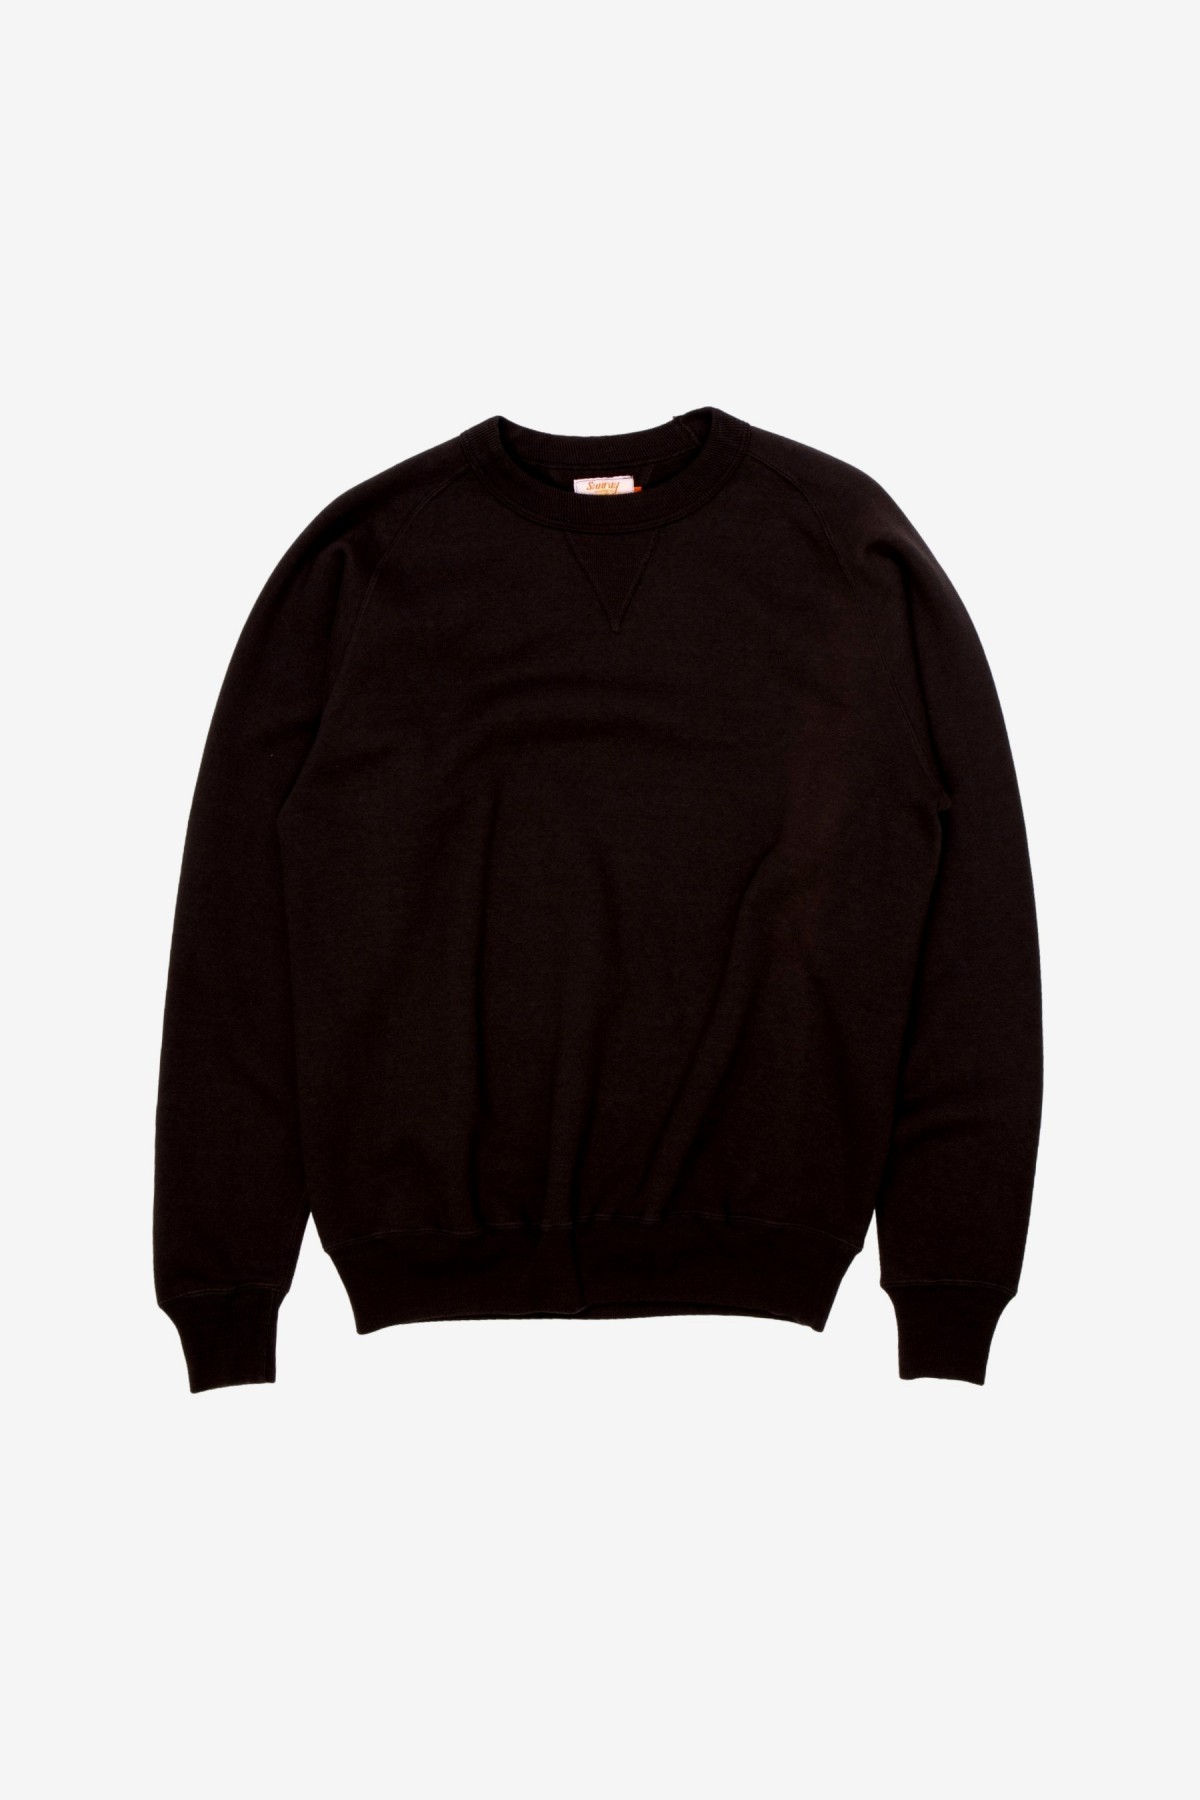 Sunray Sportswear Puamana Crewneck Sweater in Kokoshuko Black